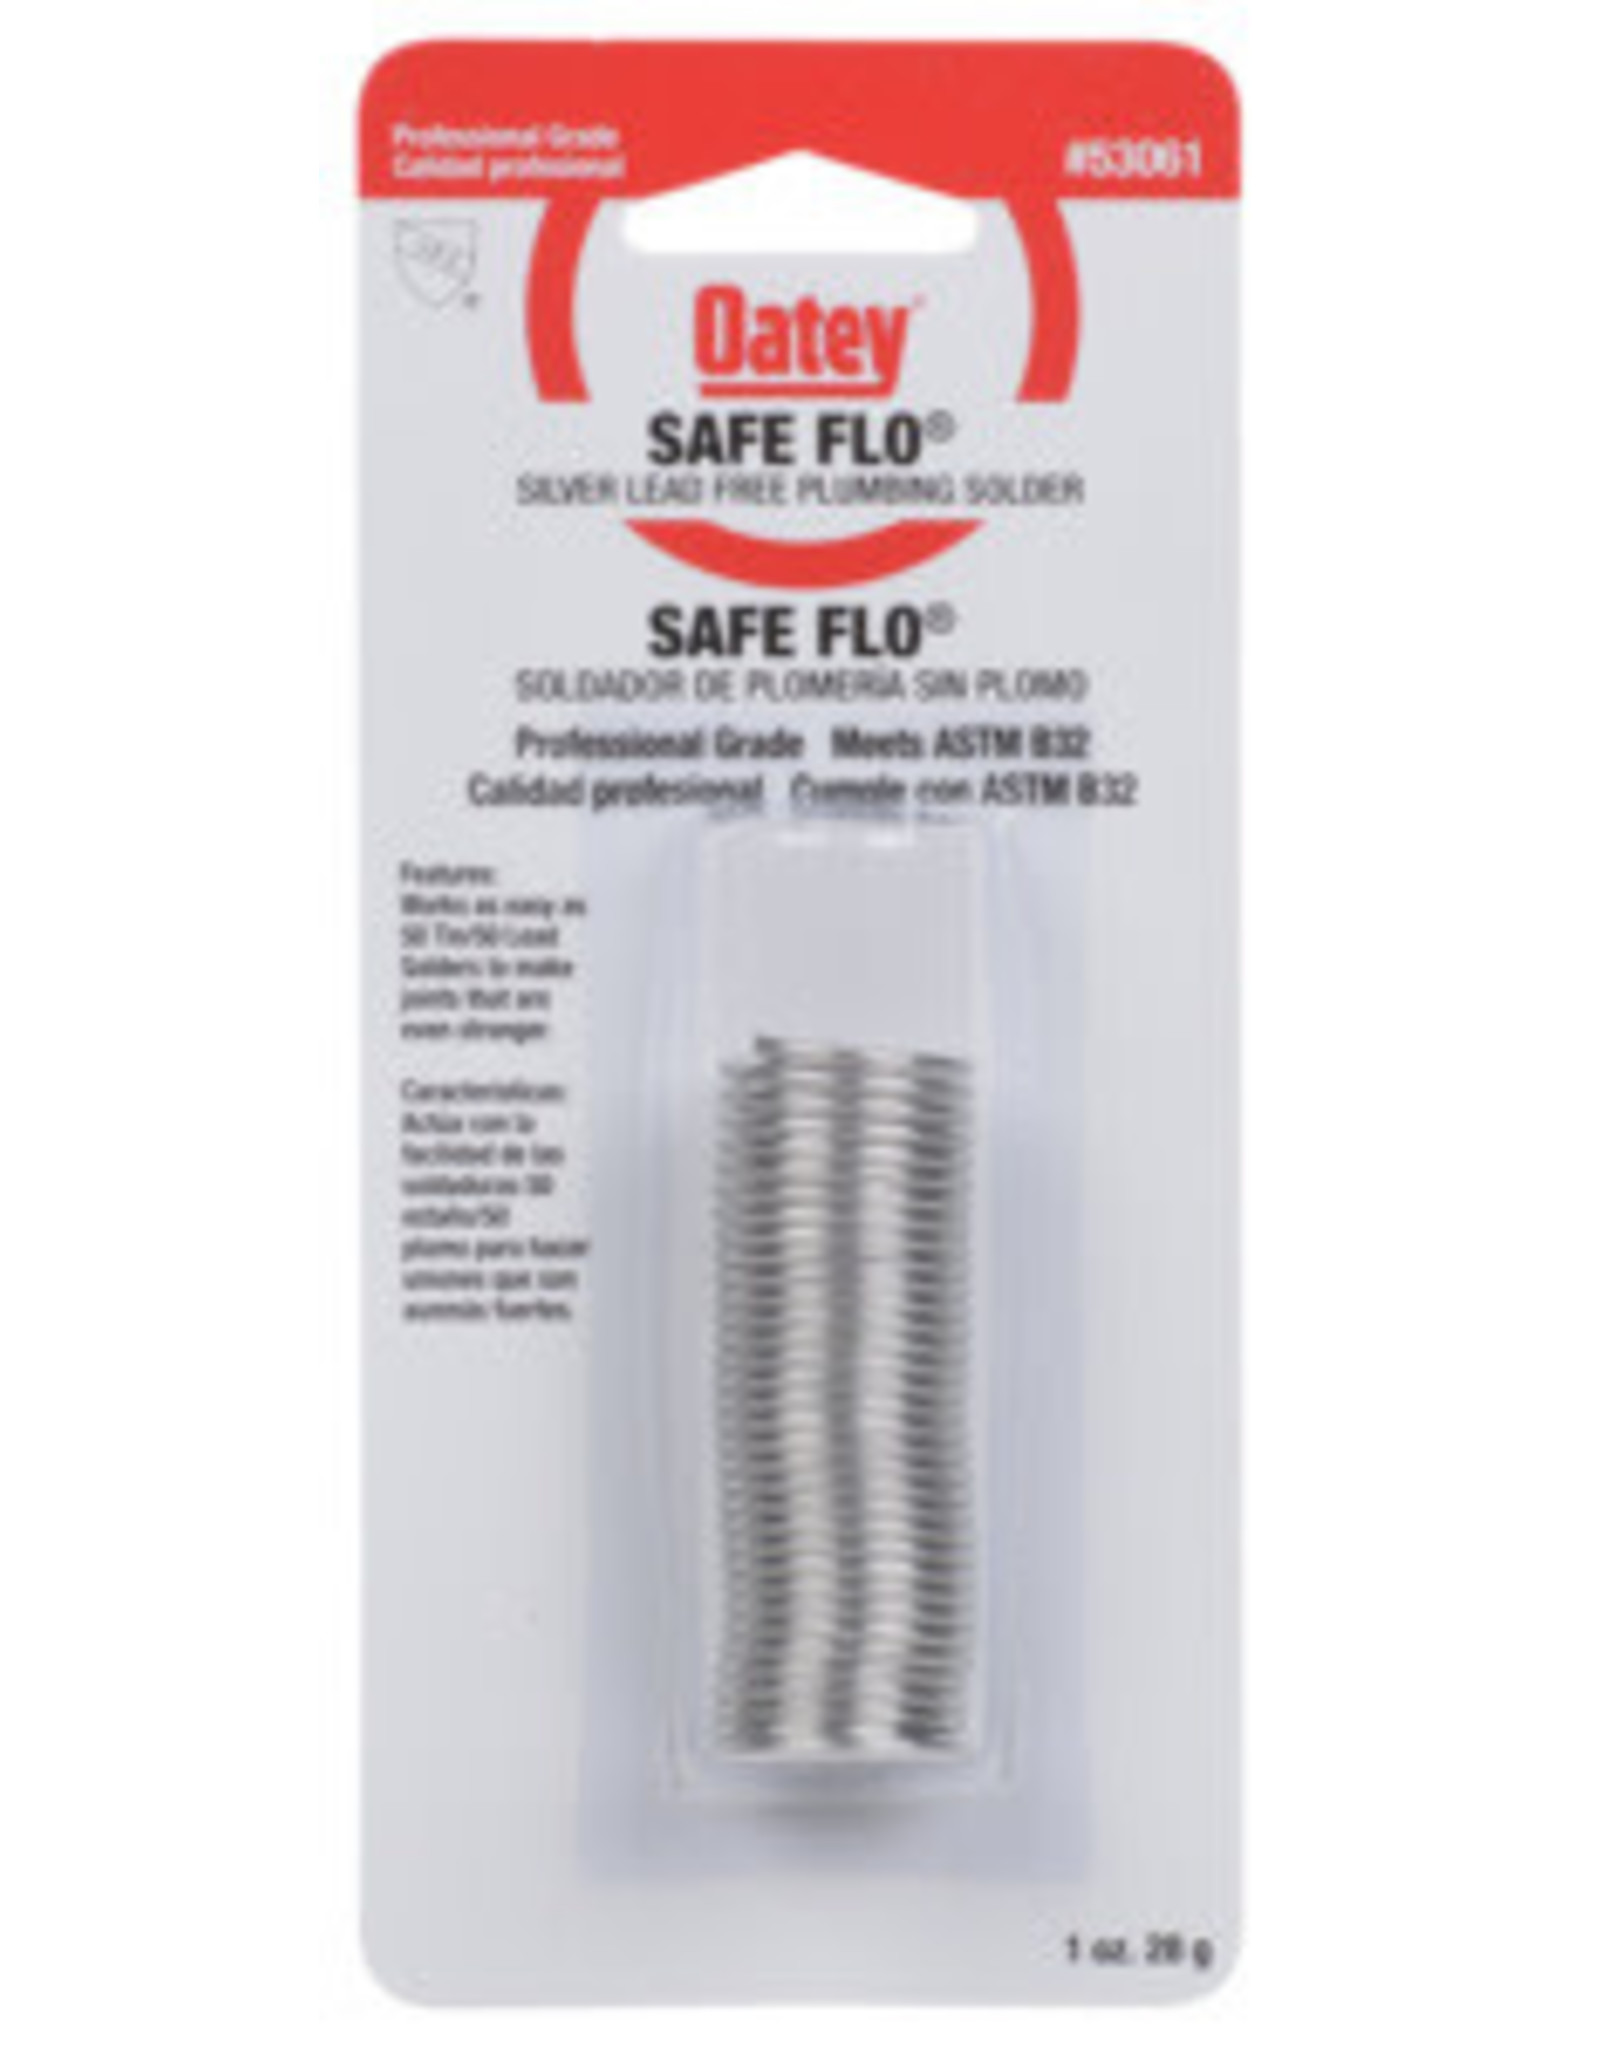 Oatey Oatey Safe-Flo 53061 Wire Solder, 1 oz Carded, Solid, Gray/Silver, 415 to 455 deg F Melting Point